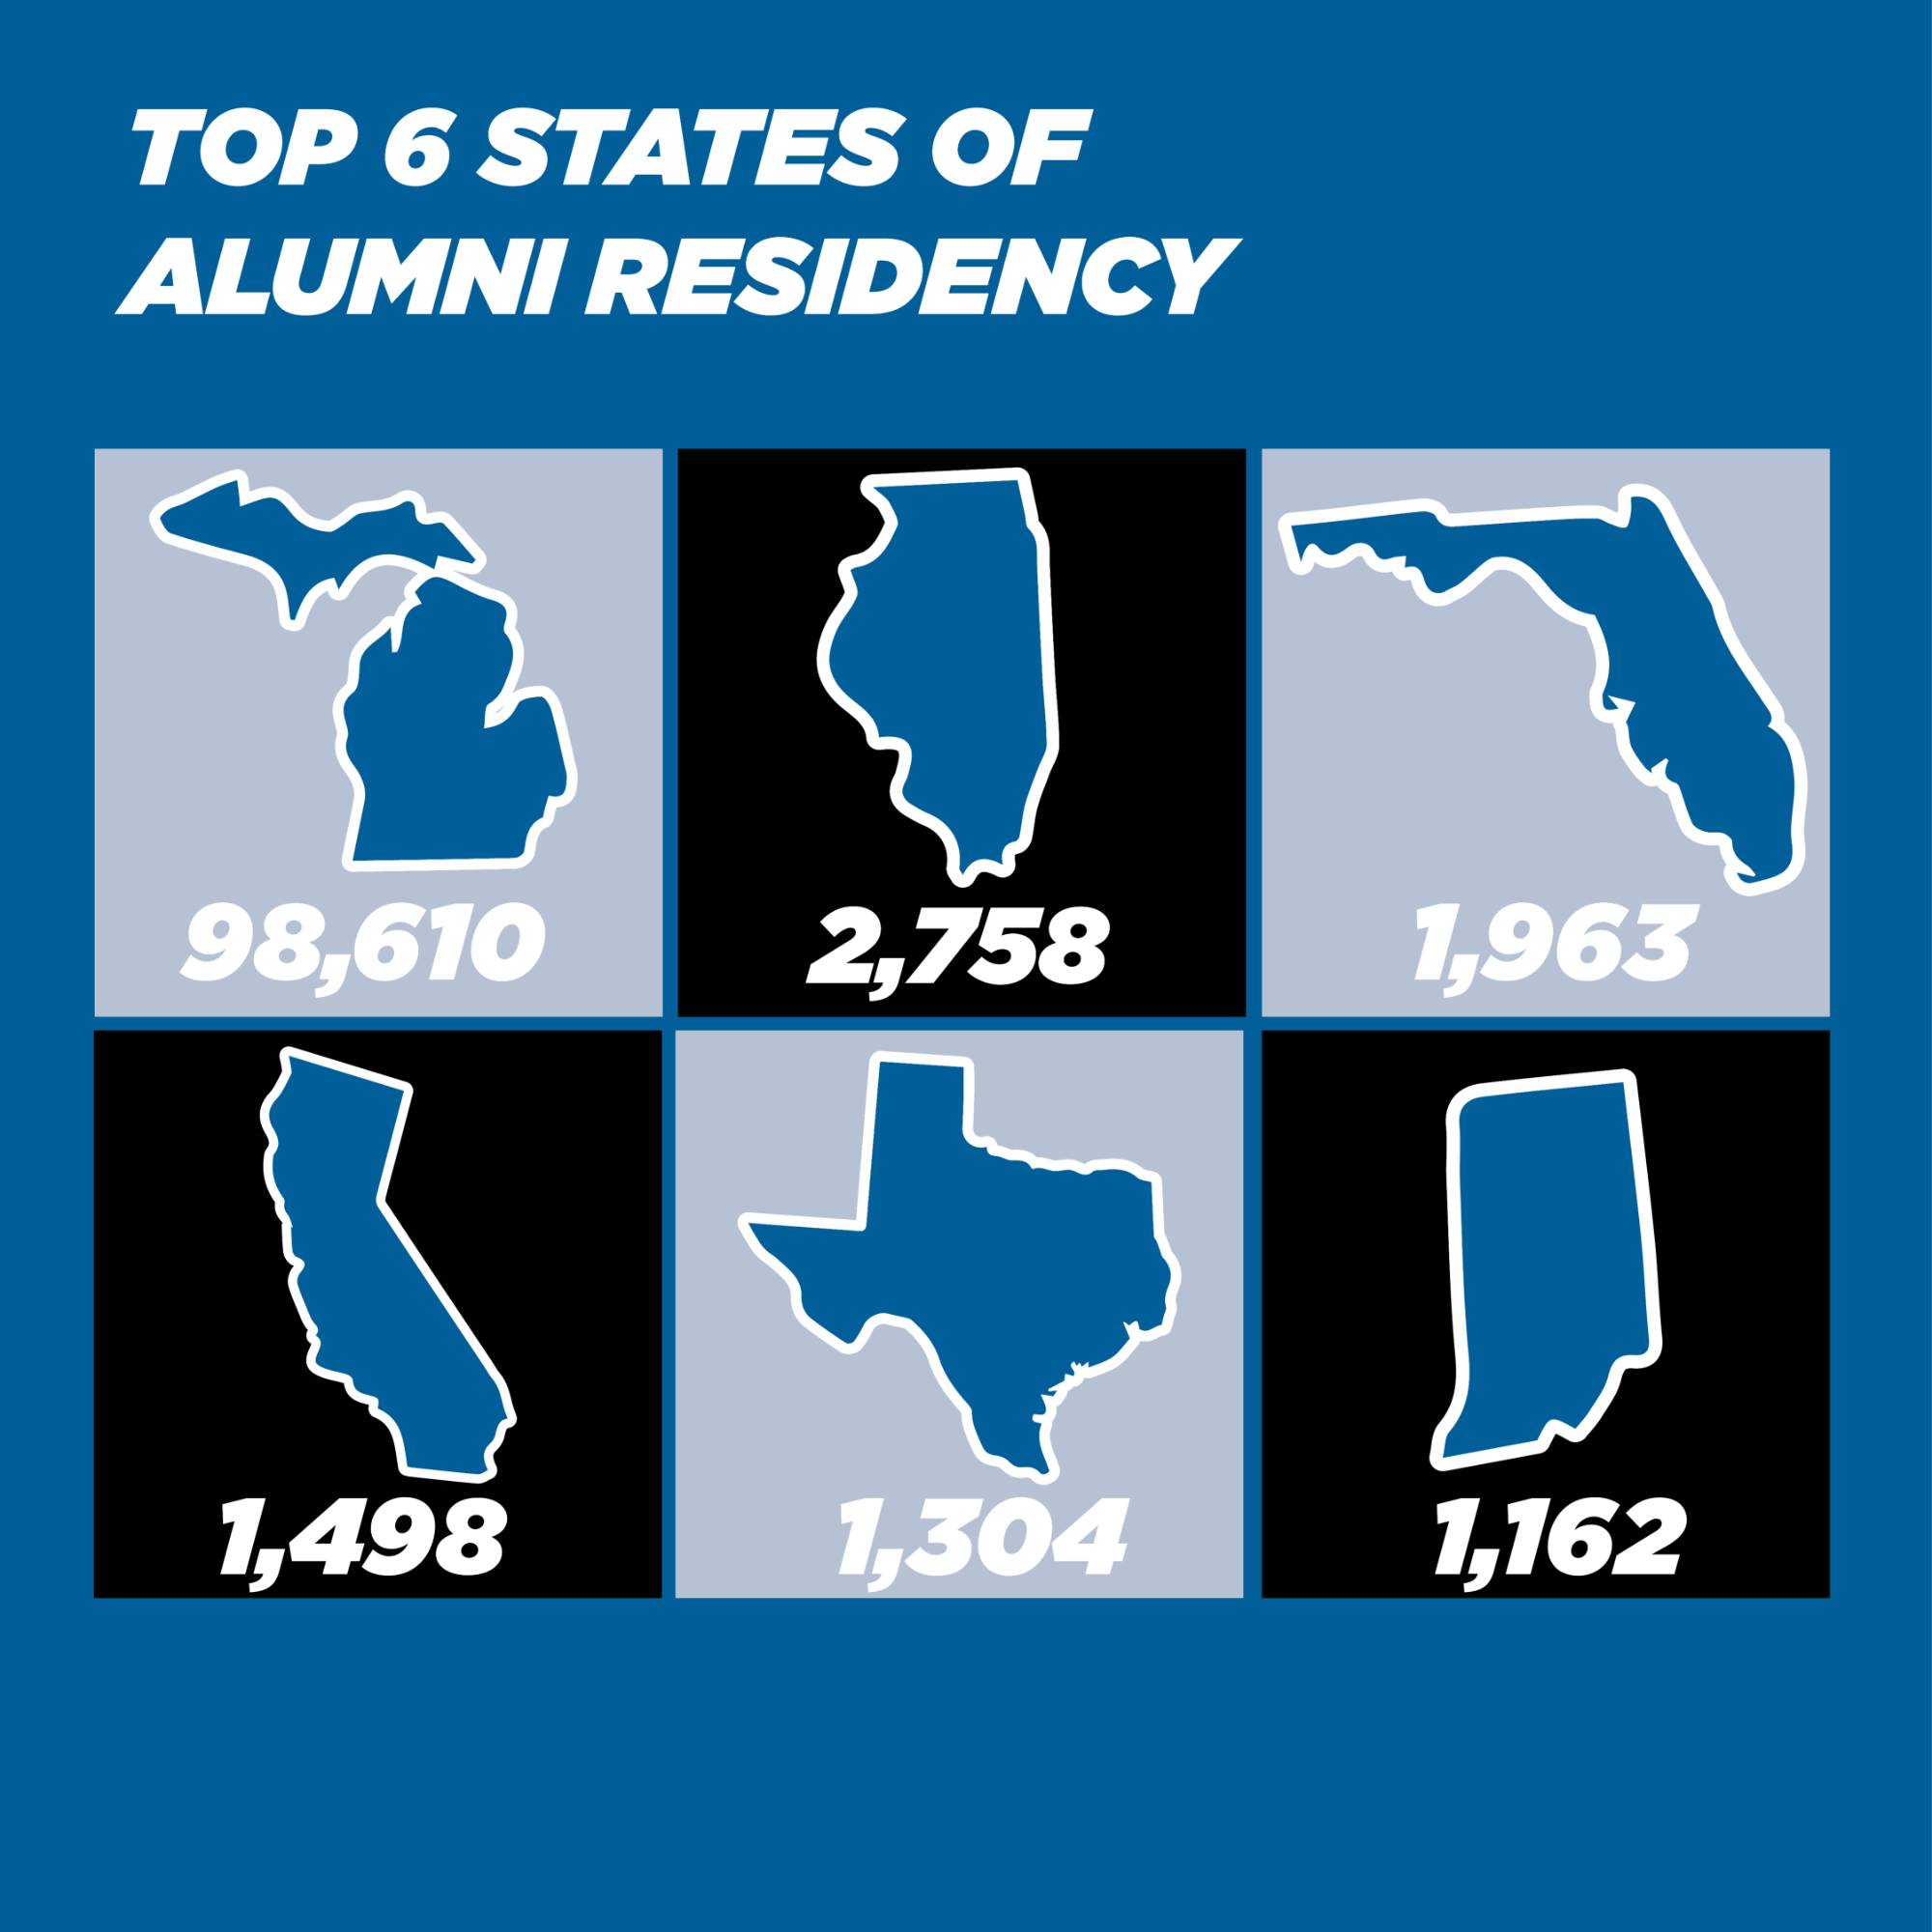 Top 6 States of Alumni Residency: Michigan 98,610, Illinois 2,758, Florida 1,963, California 1,498, Texas 1,304, Indiana 1,162.